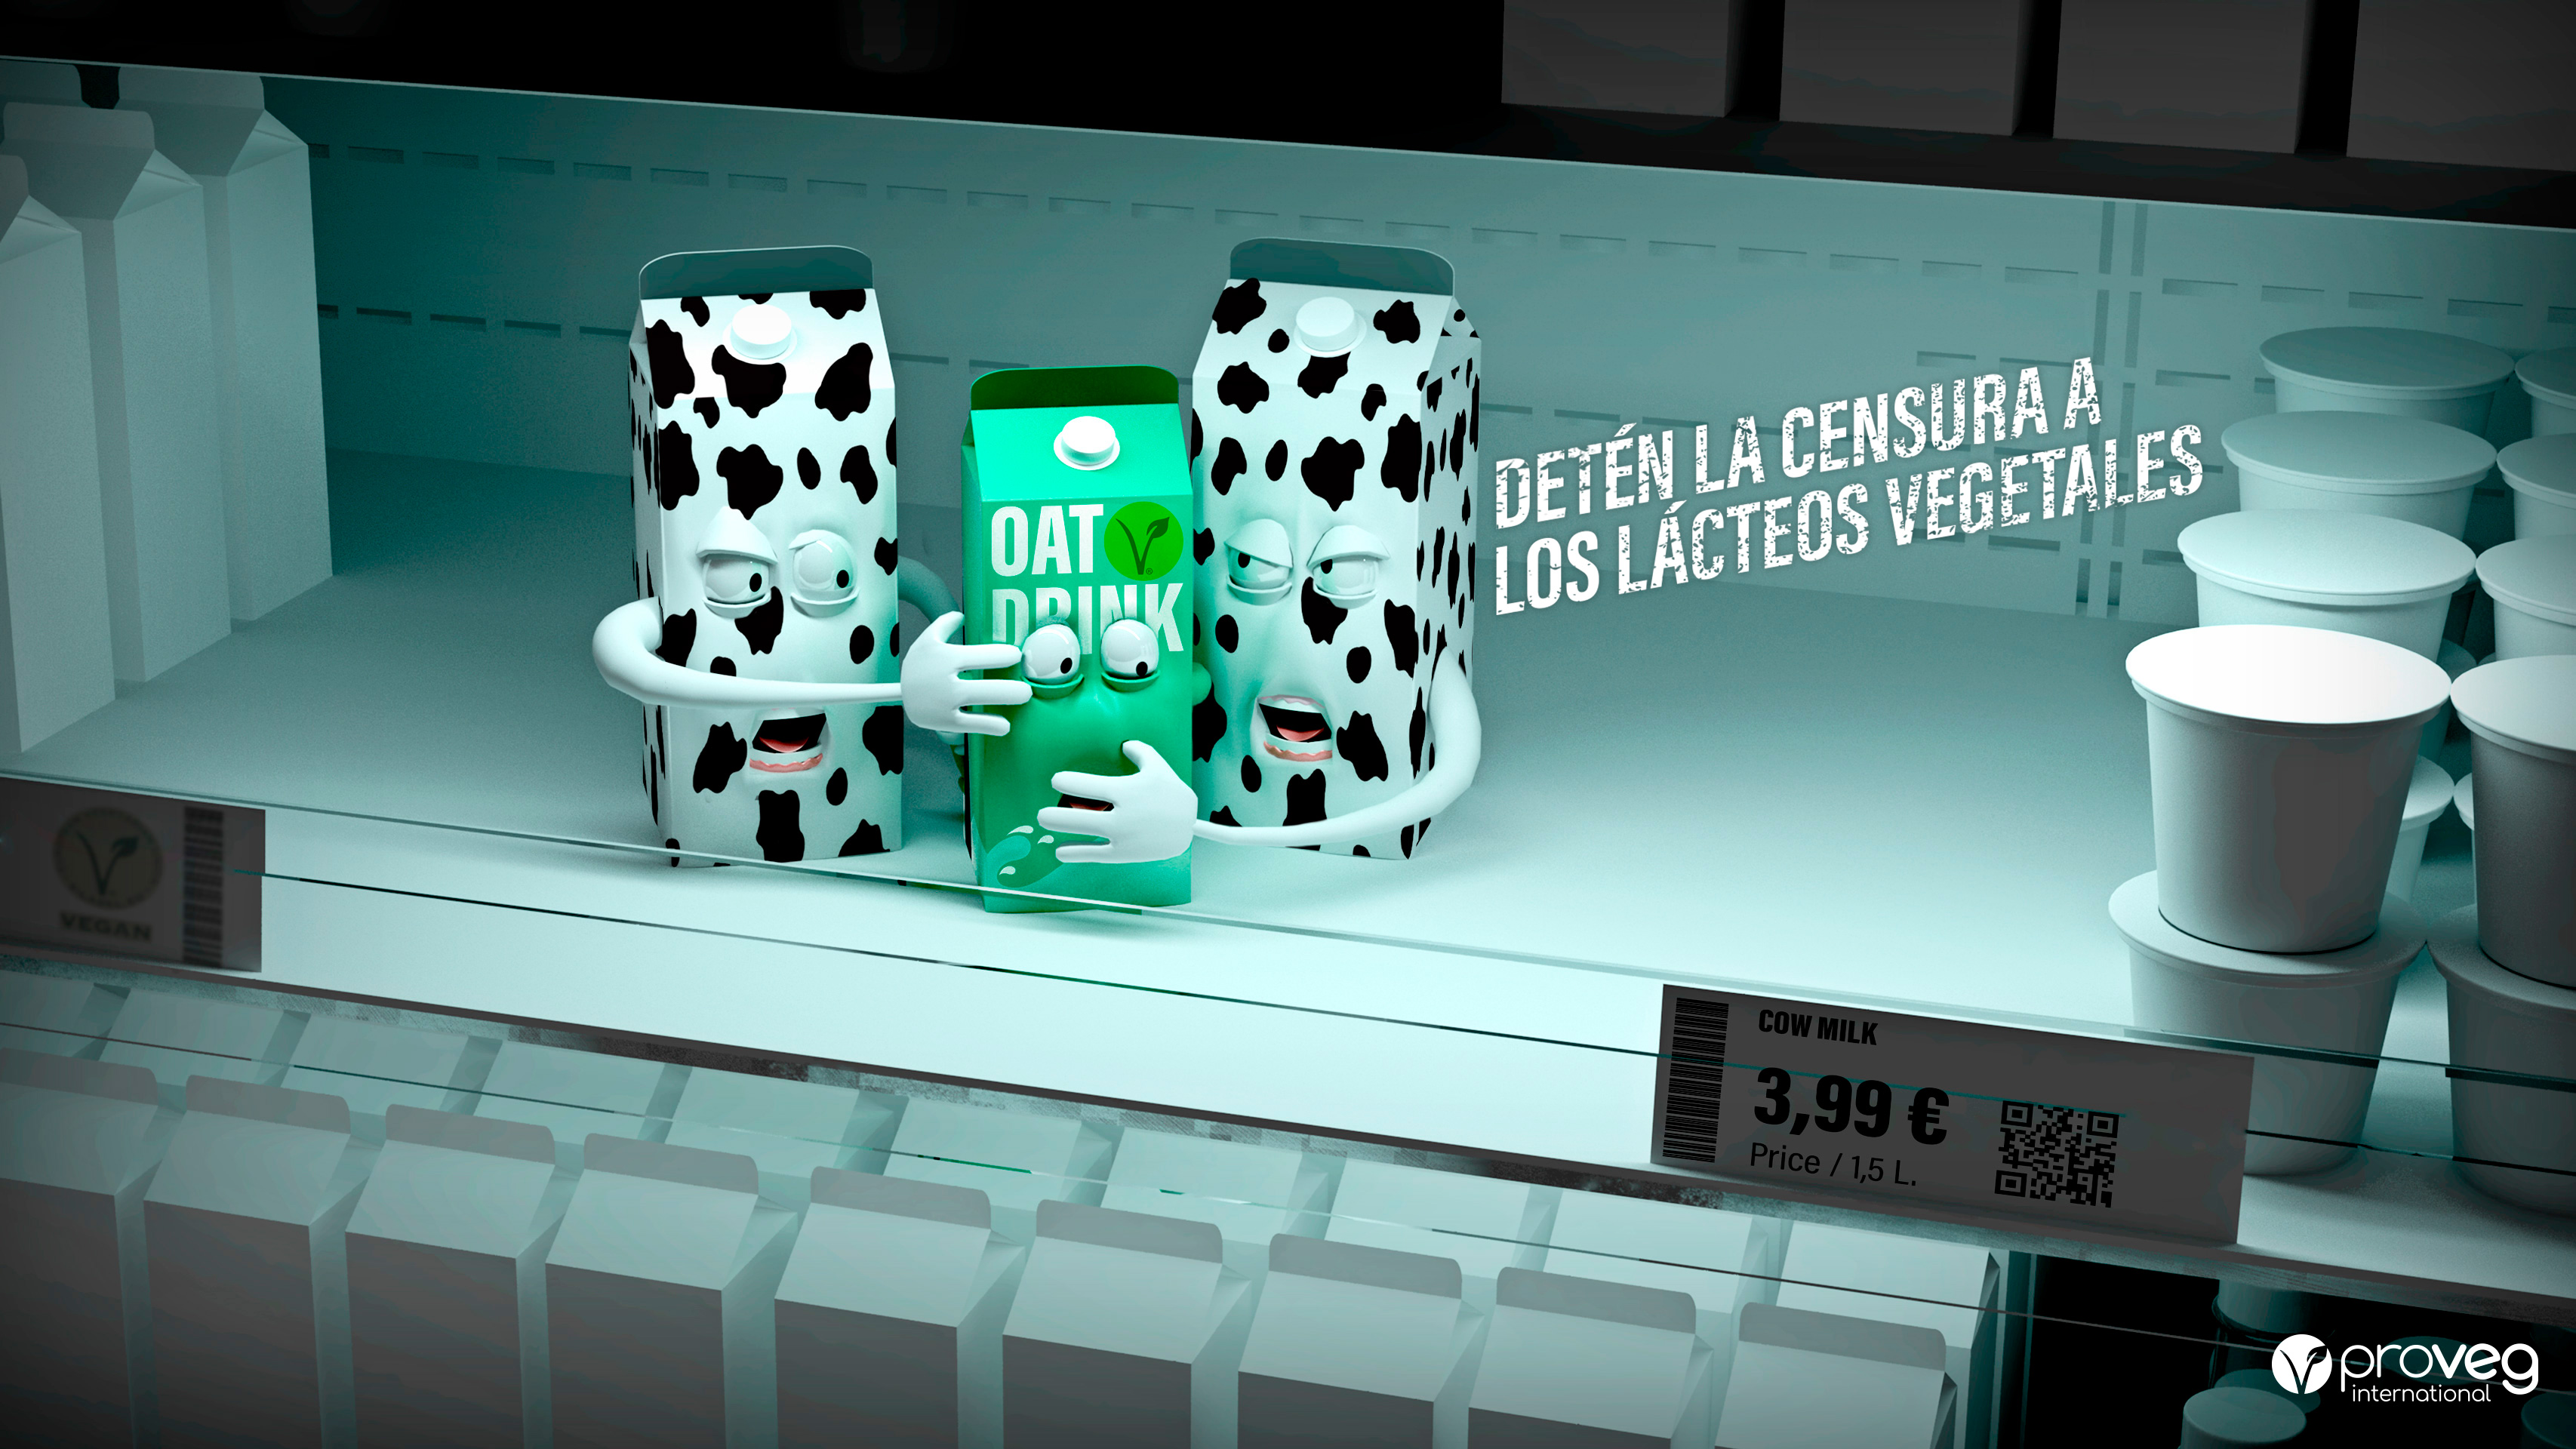 34 eurodiputados rechazan la "censura a los lácteos vegetales"